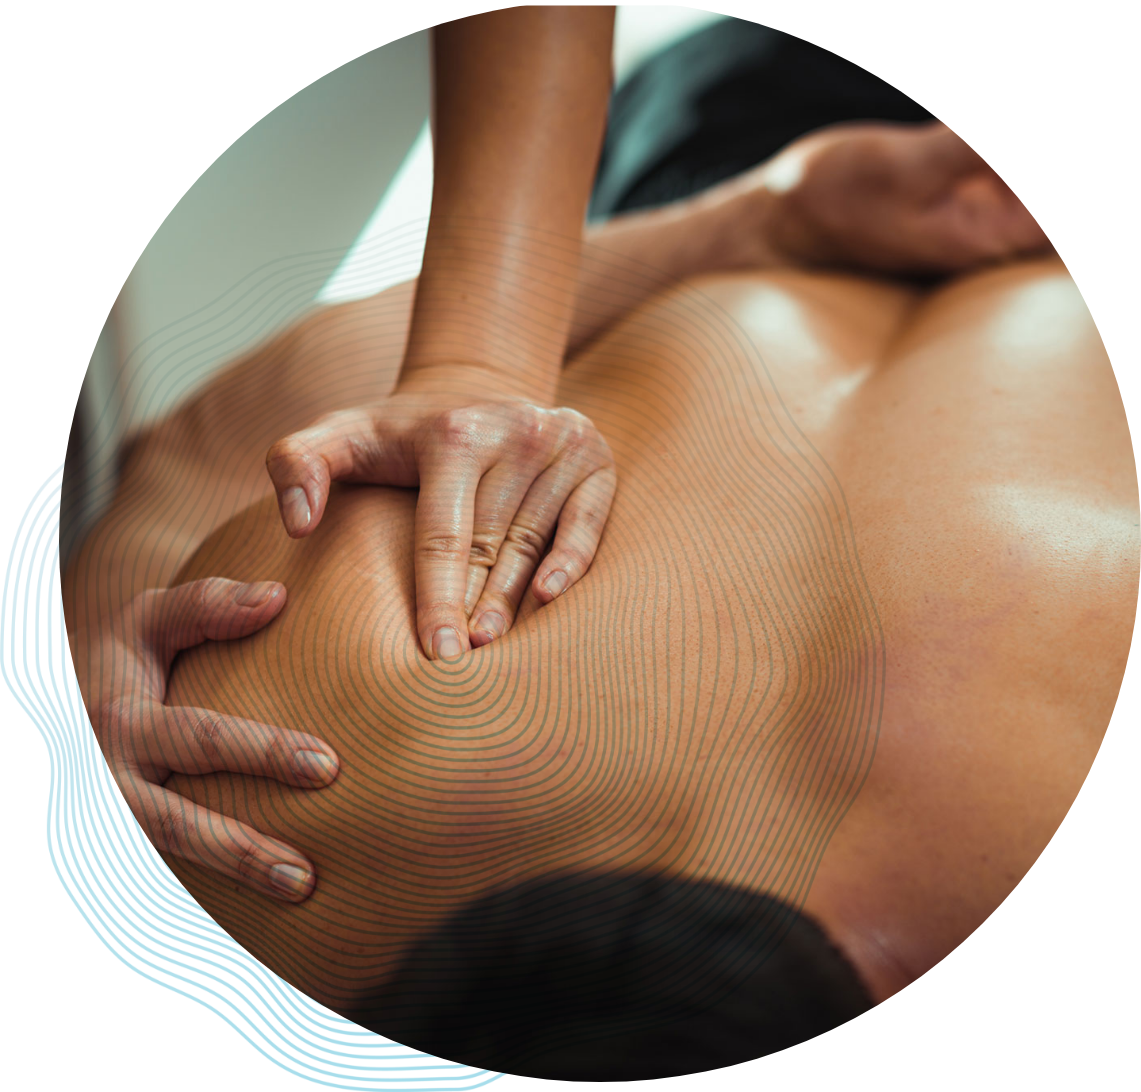 Bodymedics- Neuromuscular Massage Therapy Atlanta Georgia